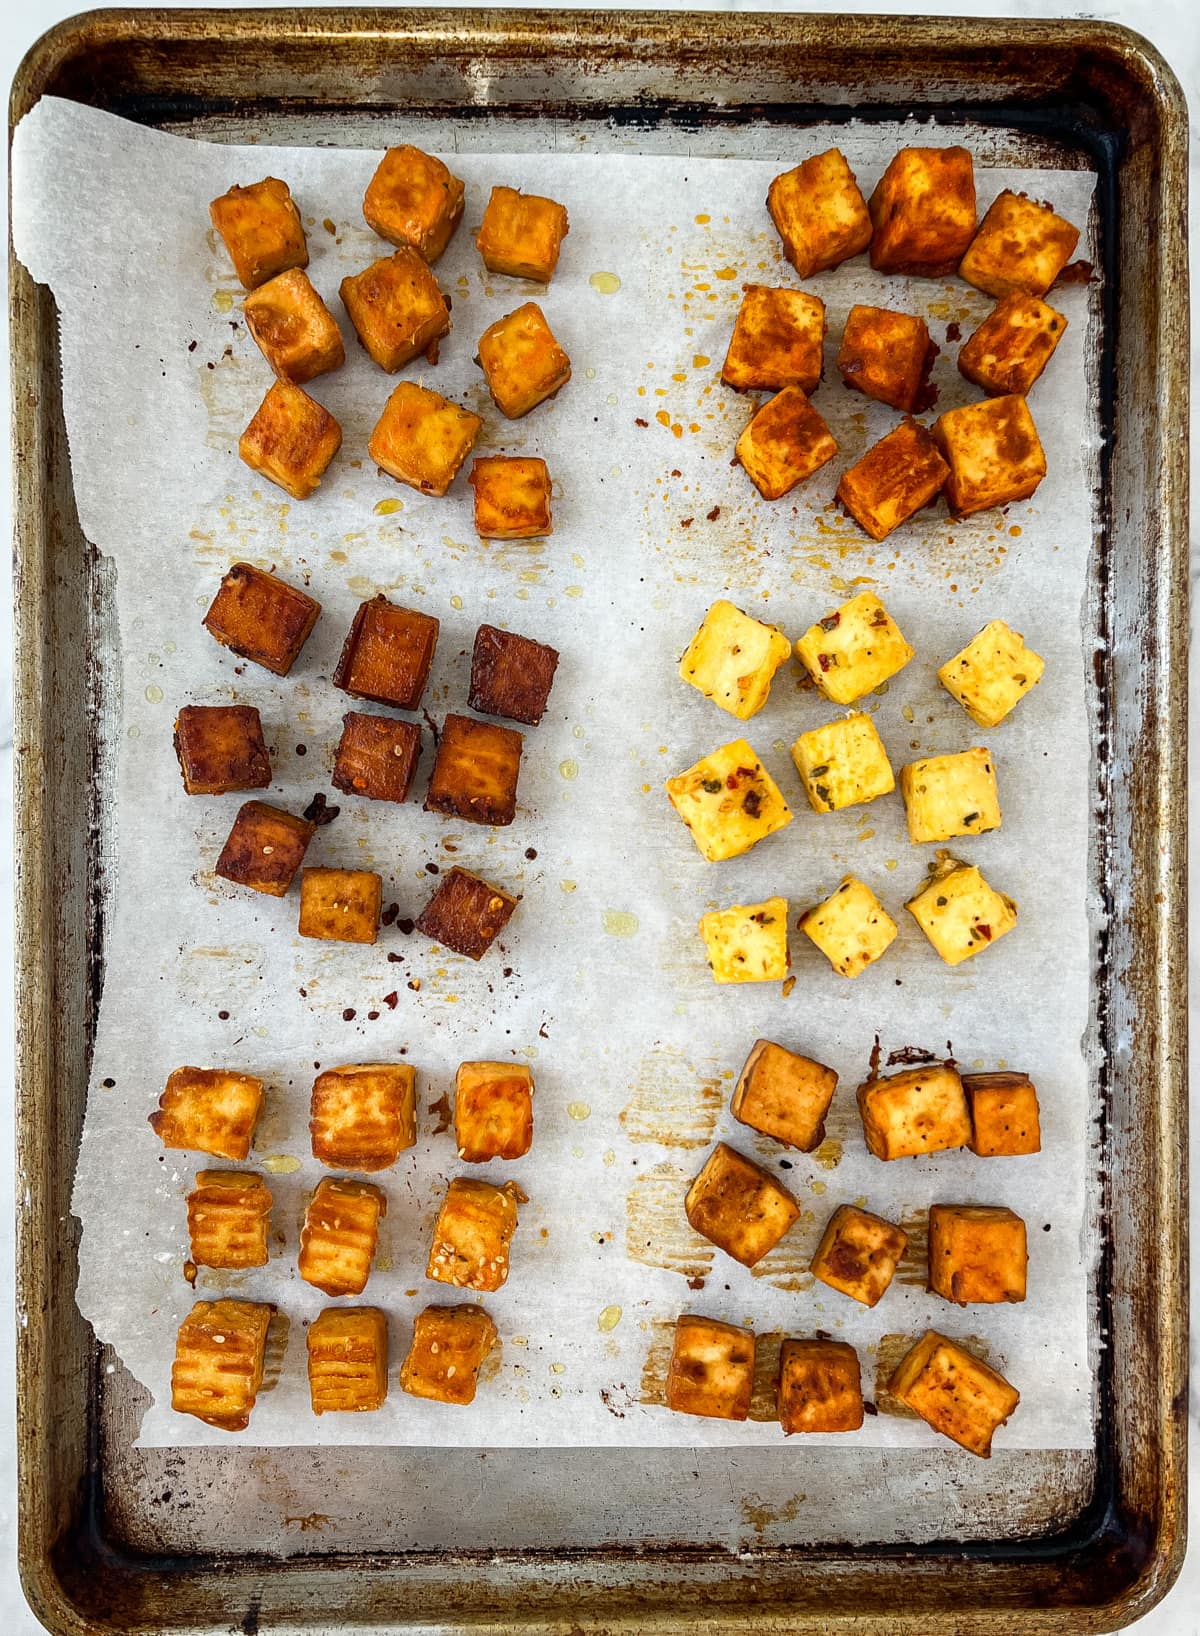 Marinated tofu cubes on a baking sheet.